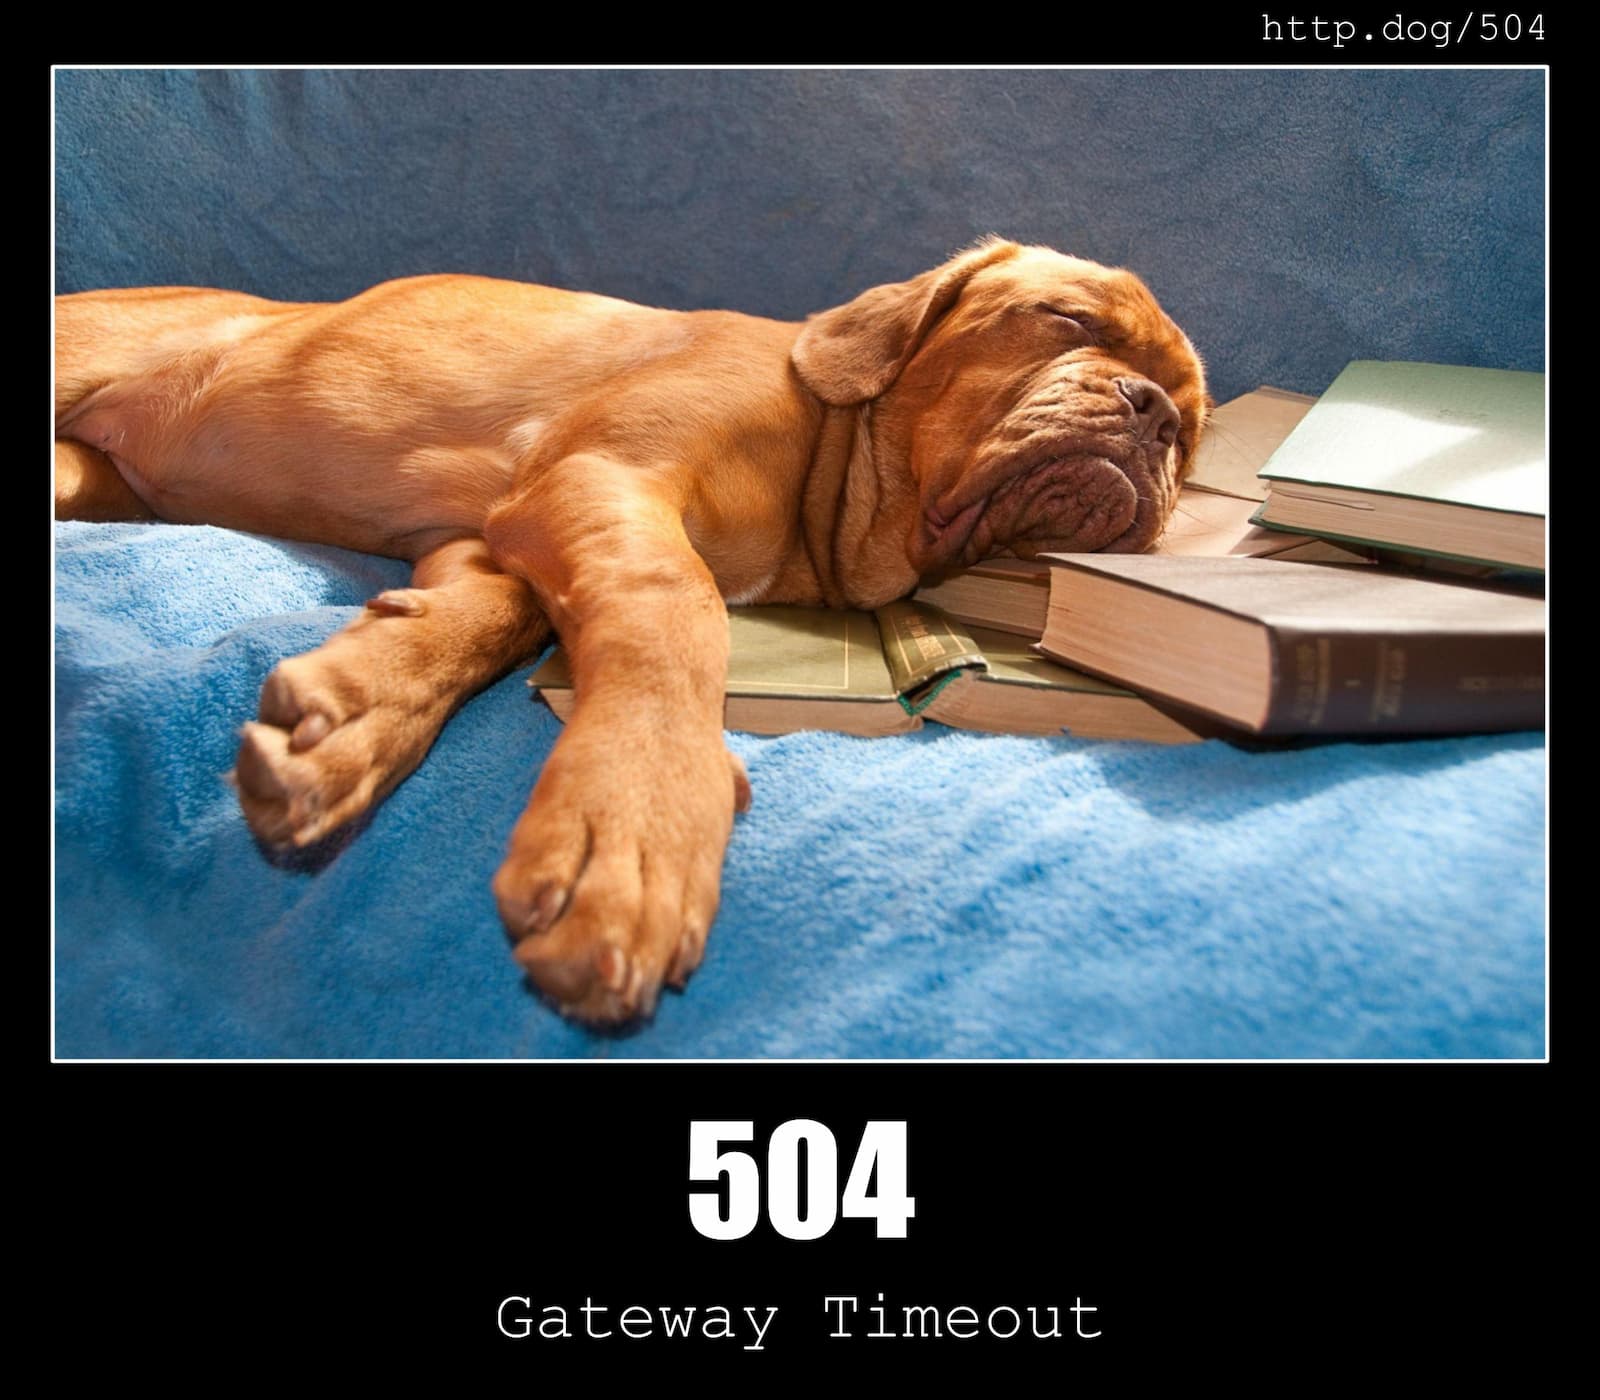 HTTP Status Code 504 Gateway Timeout & Dogs